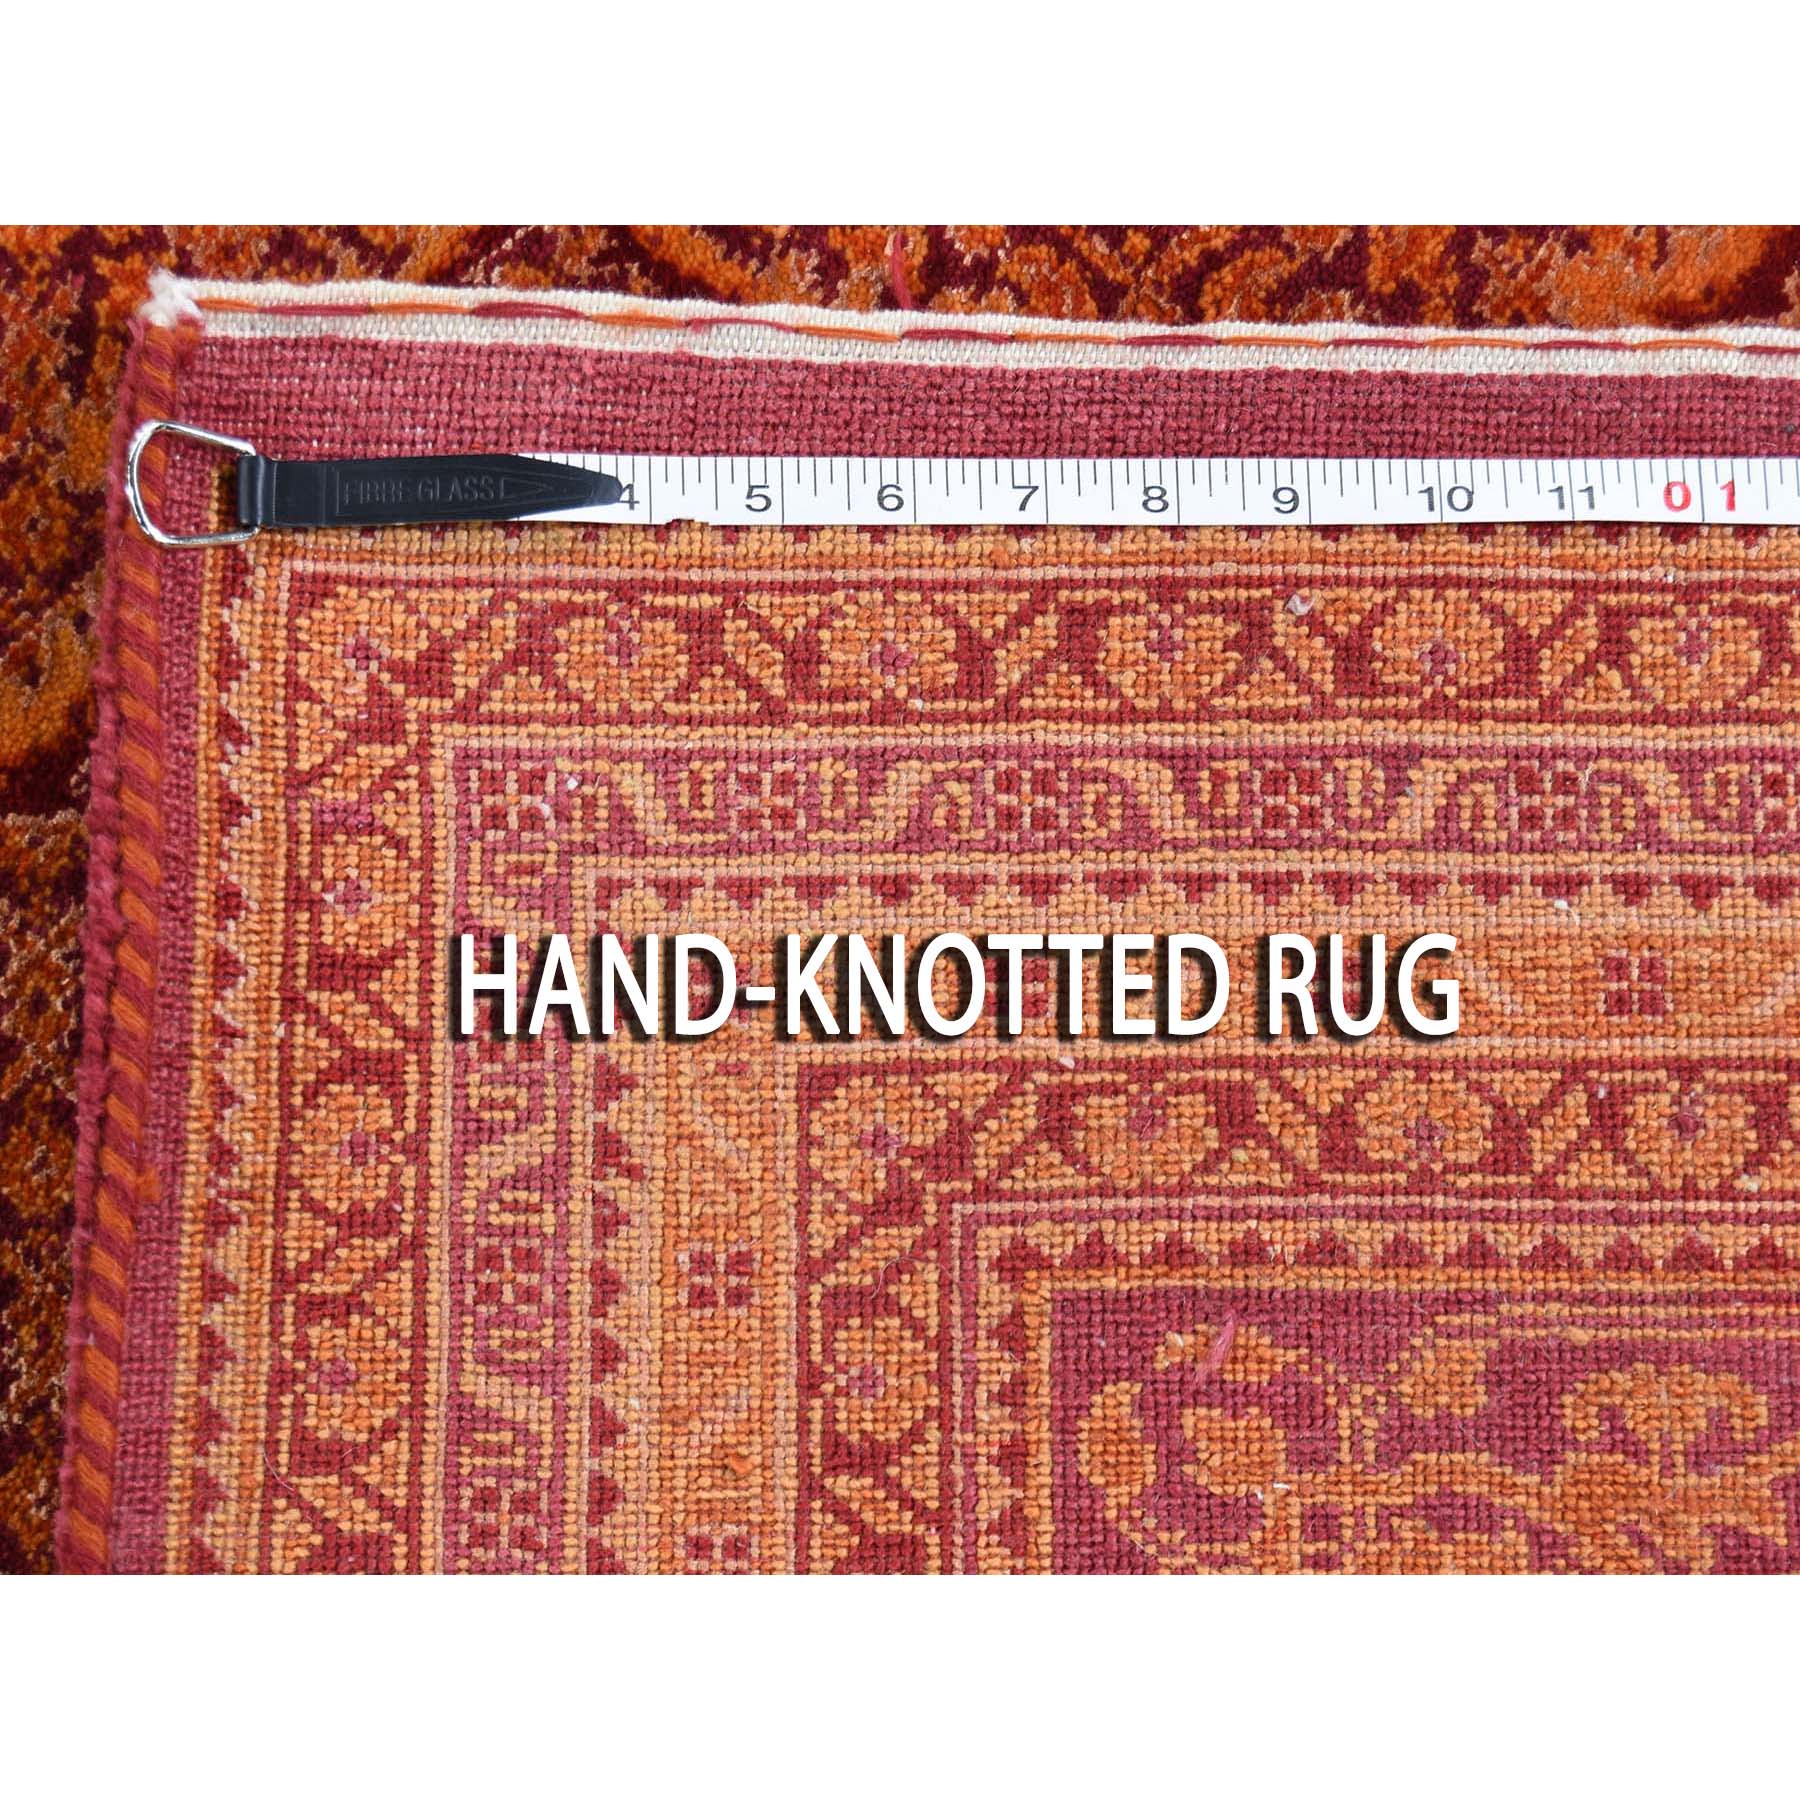 9-x12-1  Orange Tabriz Mahi Hand Knotted Wool and Silk Oriental Rug 